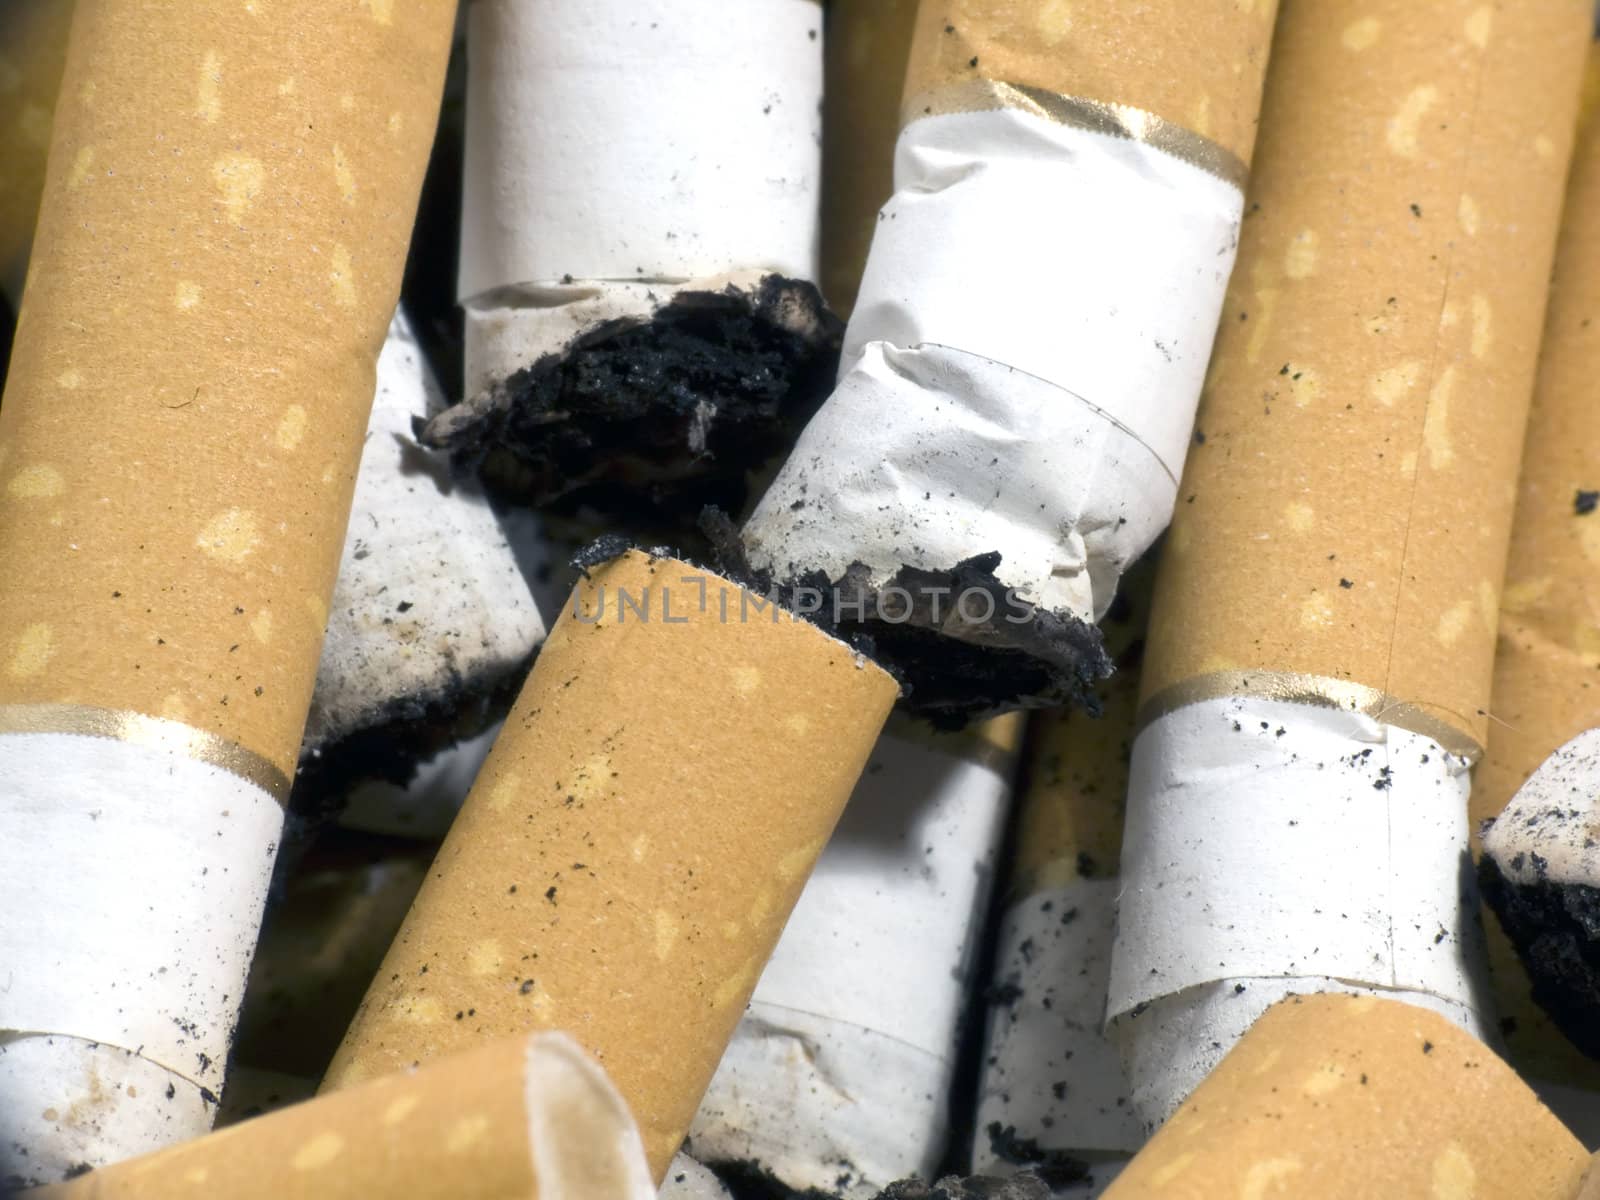 Closeup of cigarette butts